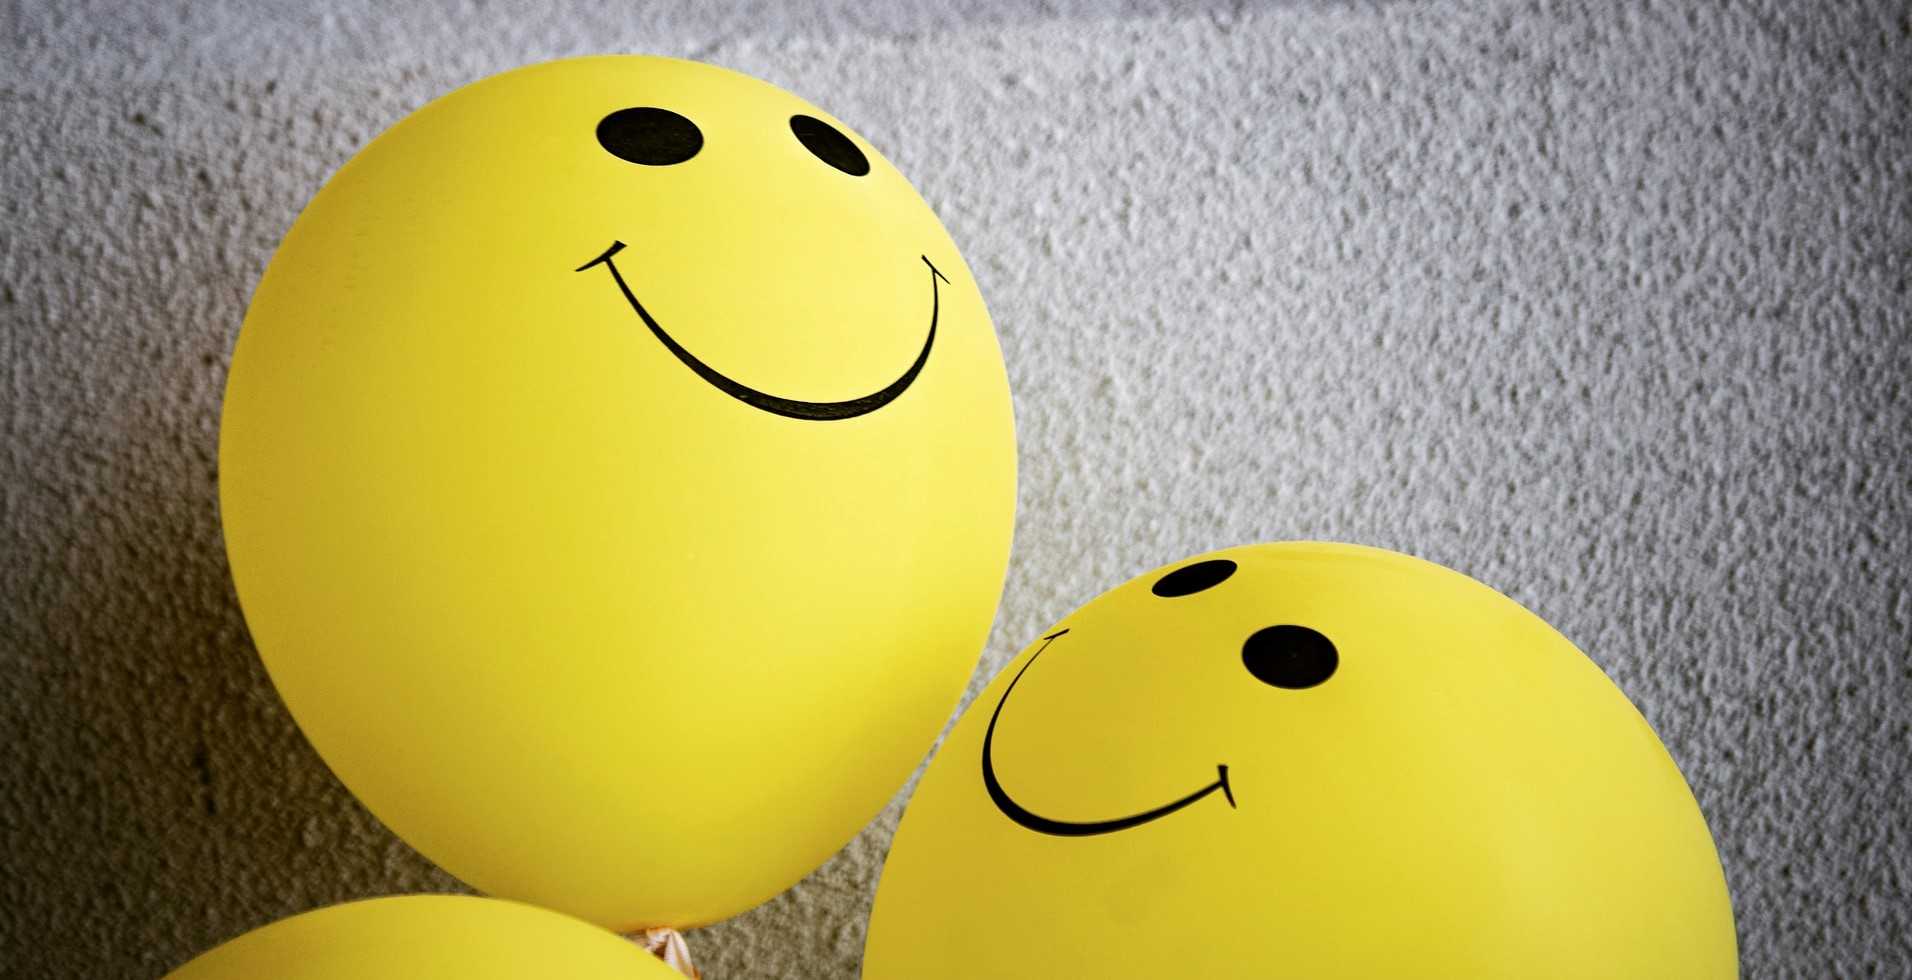 yellow balloons with smiles drawn on